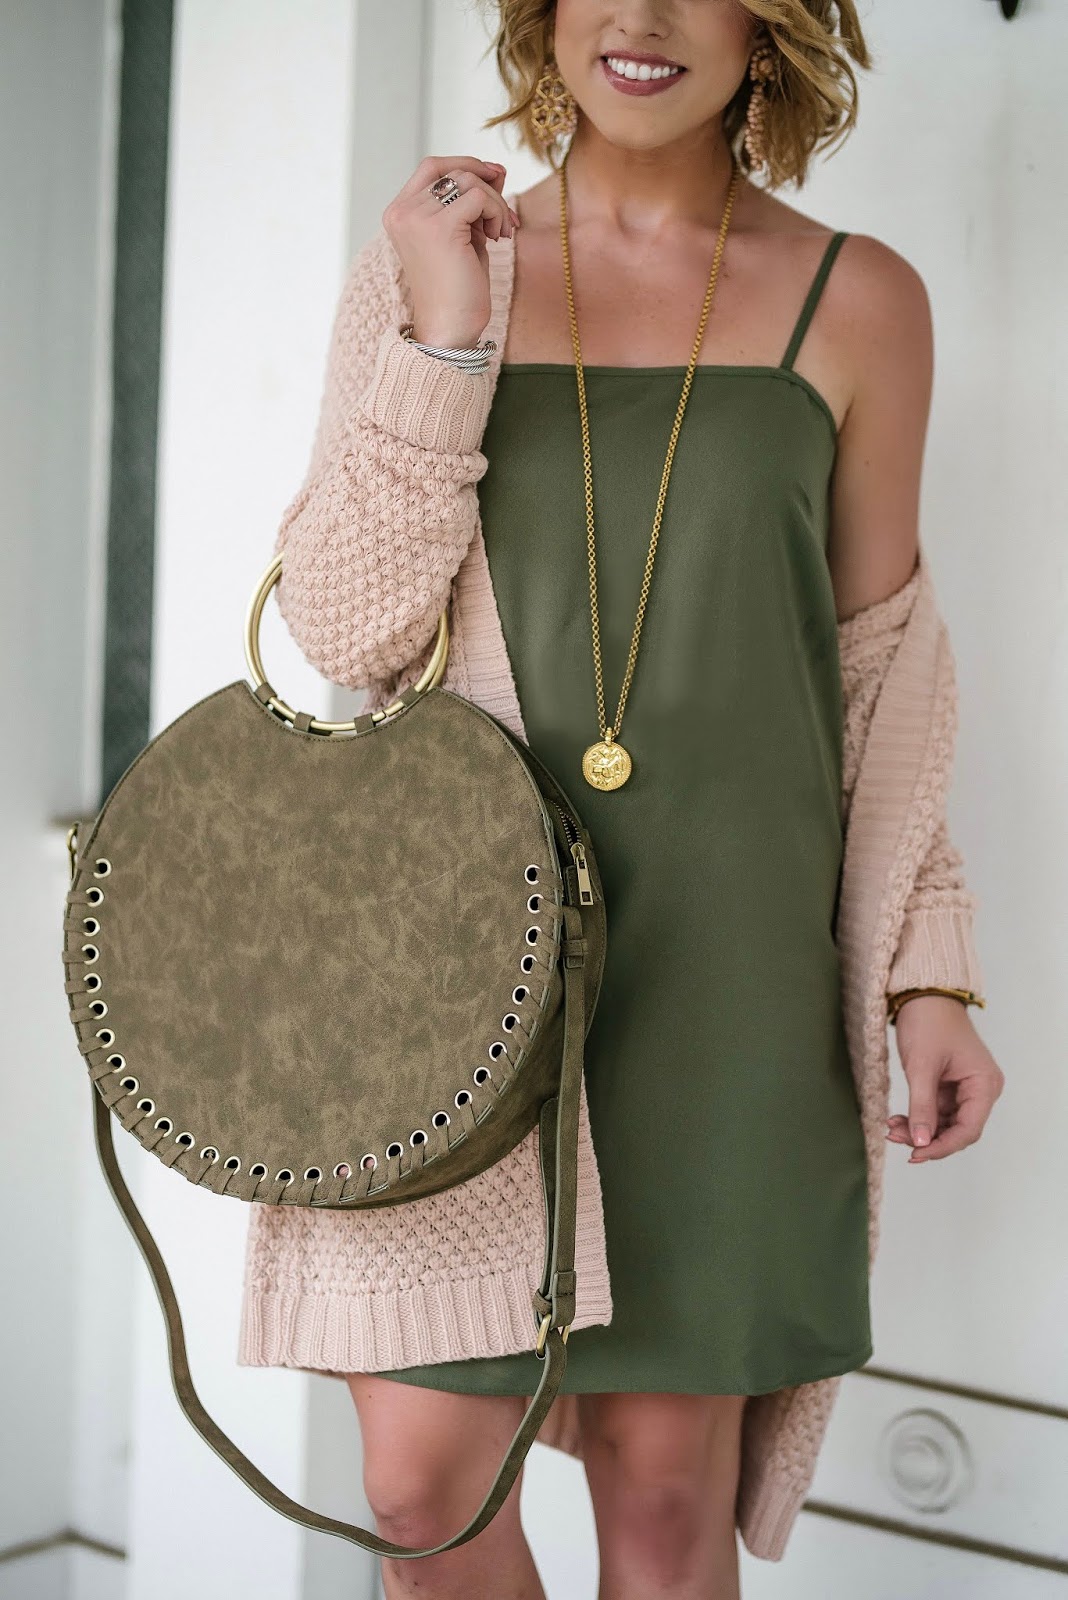 Under $40 Light Pink & $24 Olive Green Dress for Fall - Something Delightful Blog